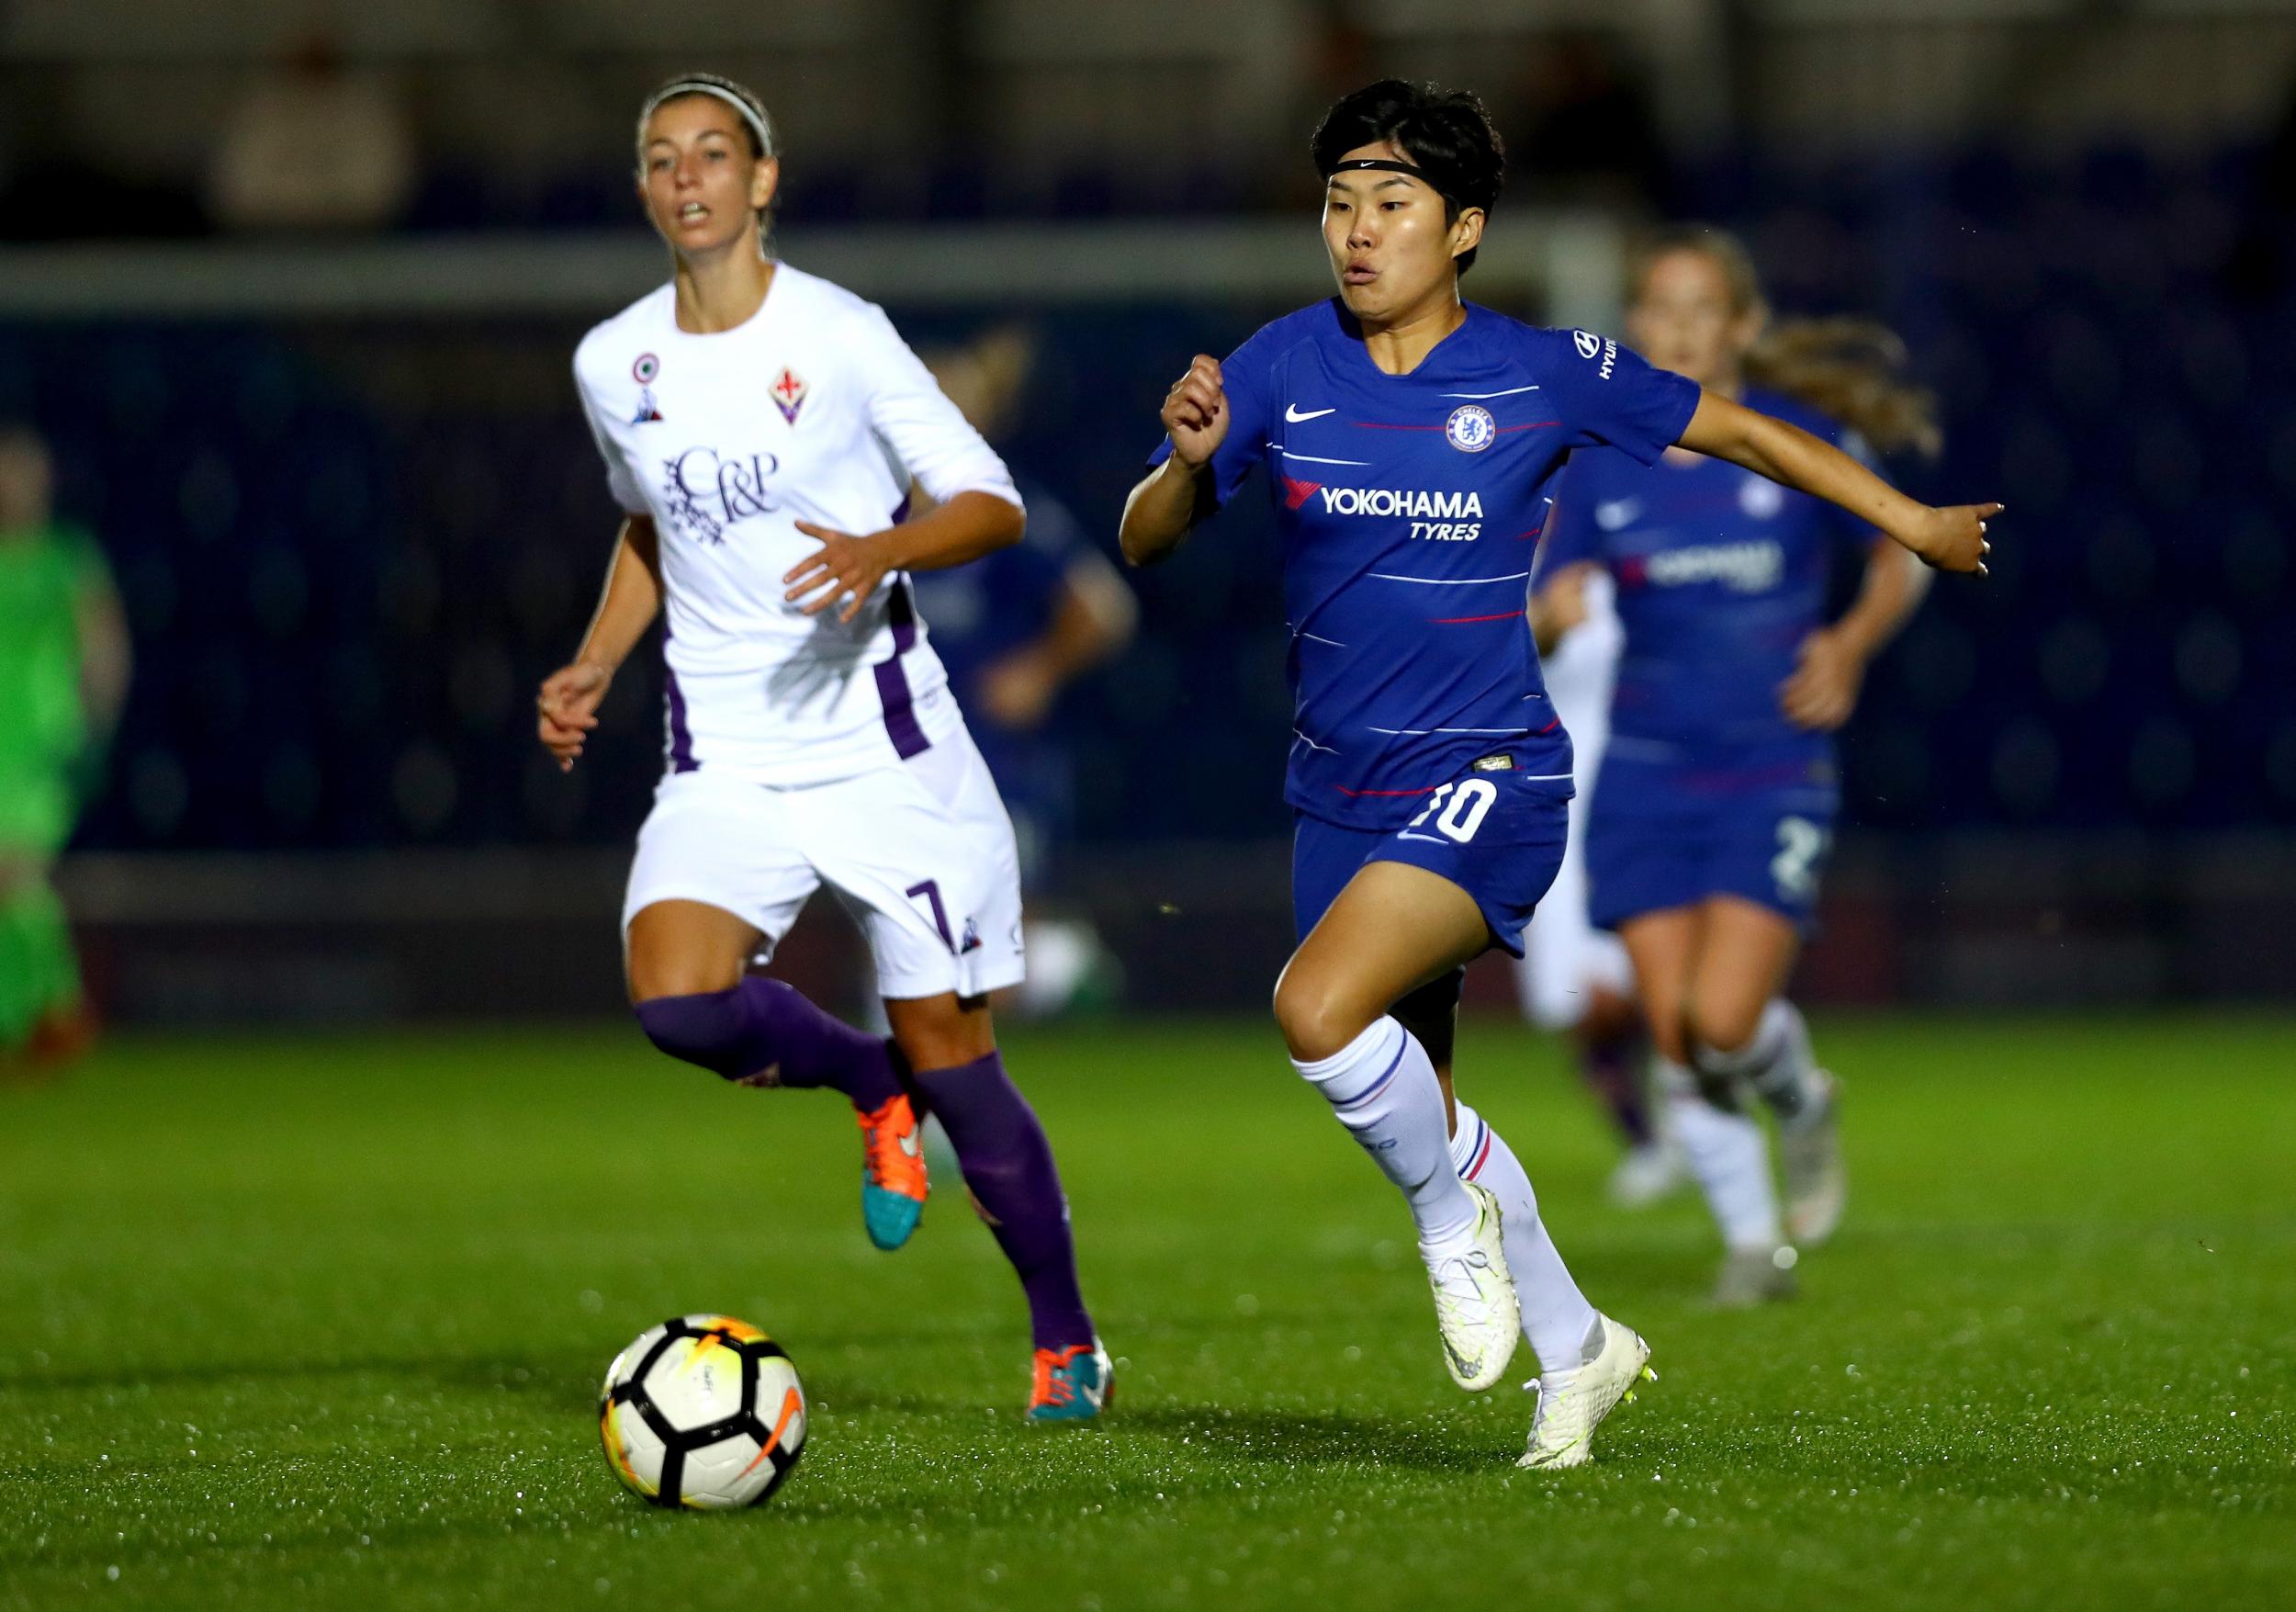 Chelsea's So-Yun Ji takes the ball past Greta Adami of Fiorentina